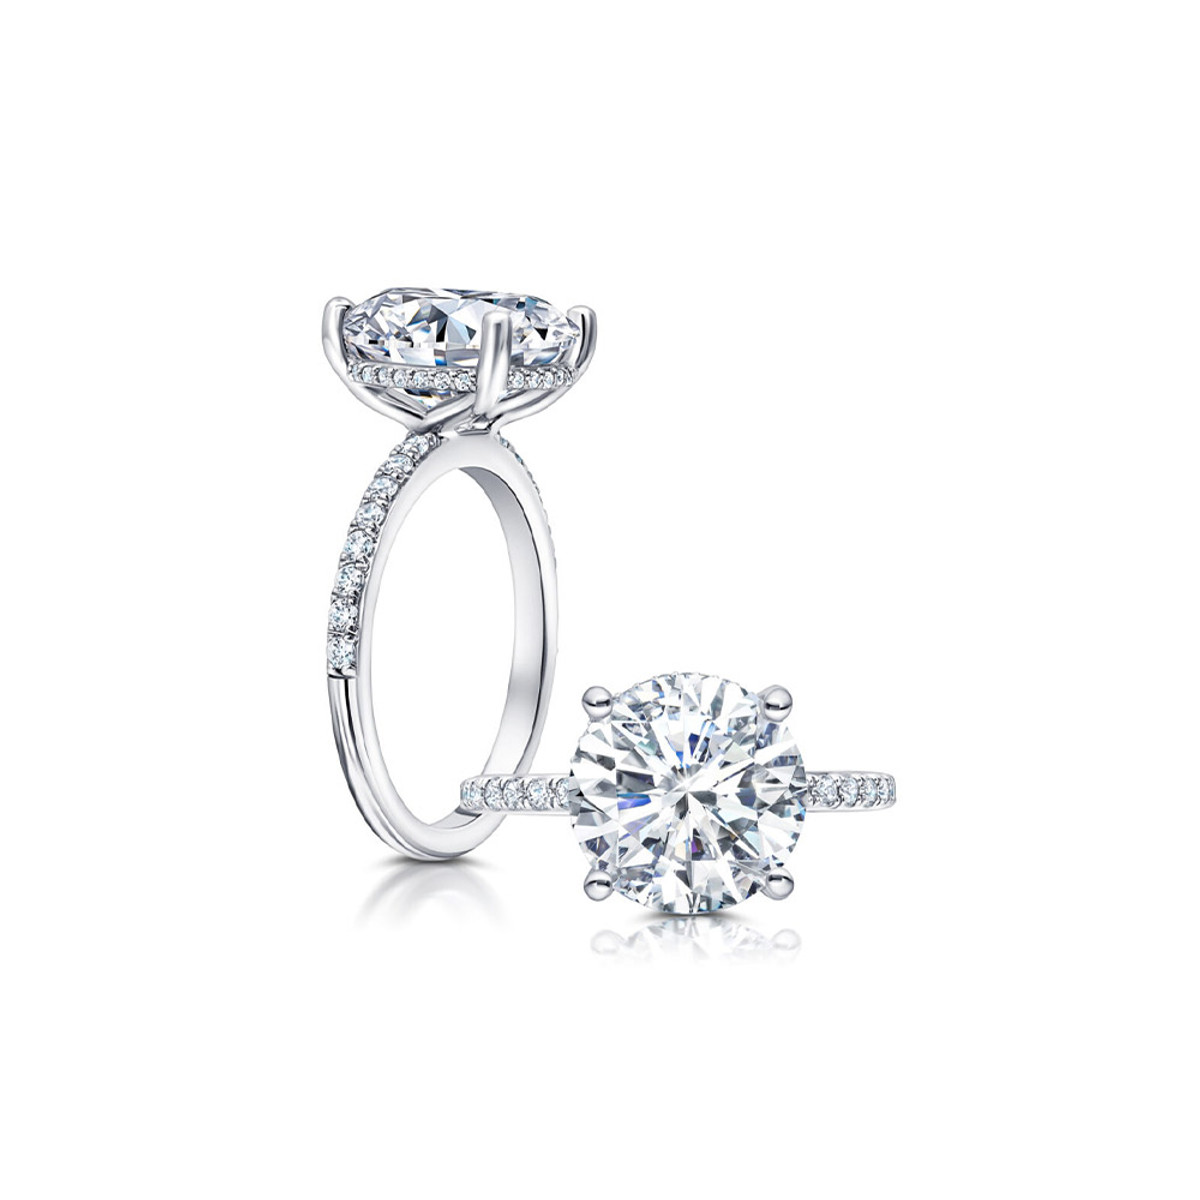 Peter Storm 14K White Gold Diamond Semi-Mount Engagement Ring-45535 Product Image